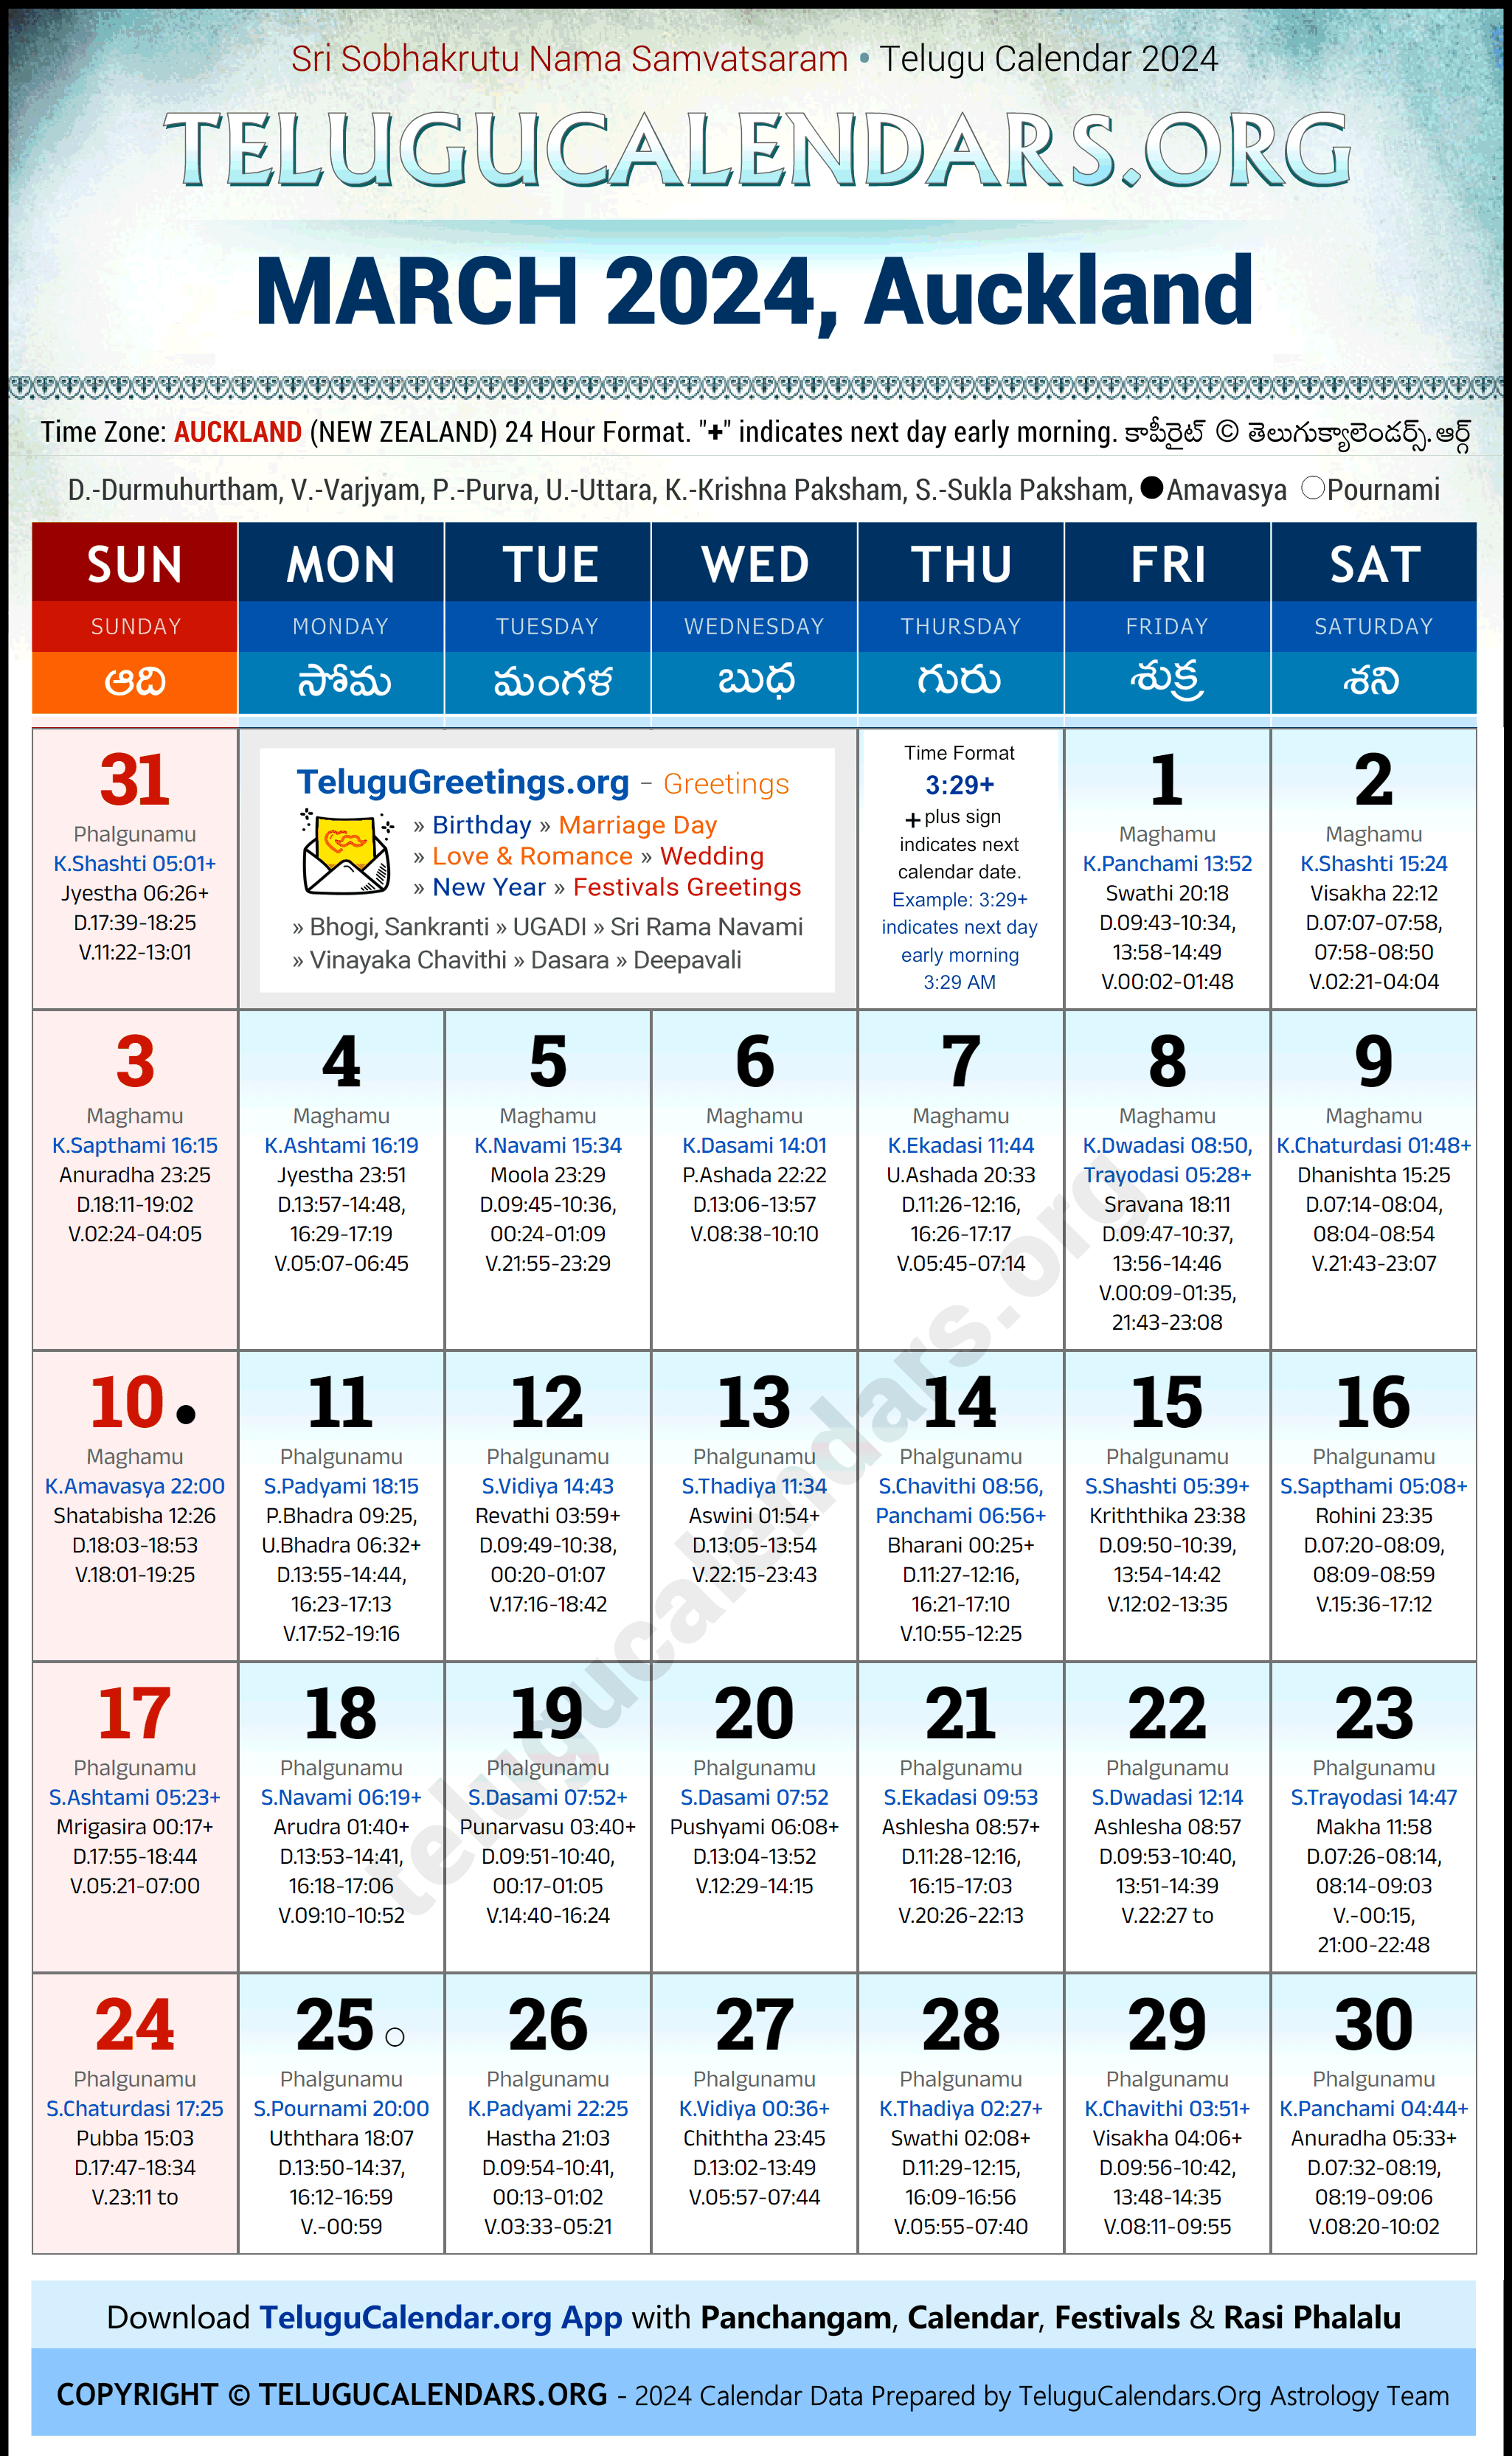 Telugu Calendar 2024 March Festivals for Auckland